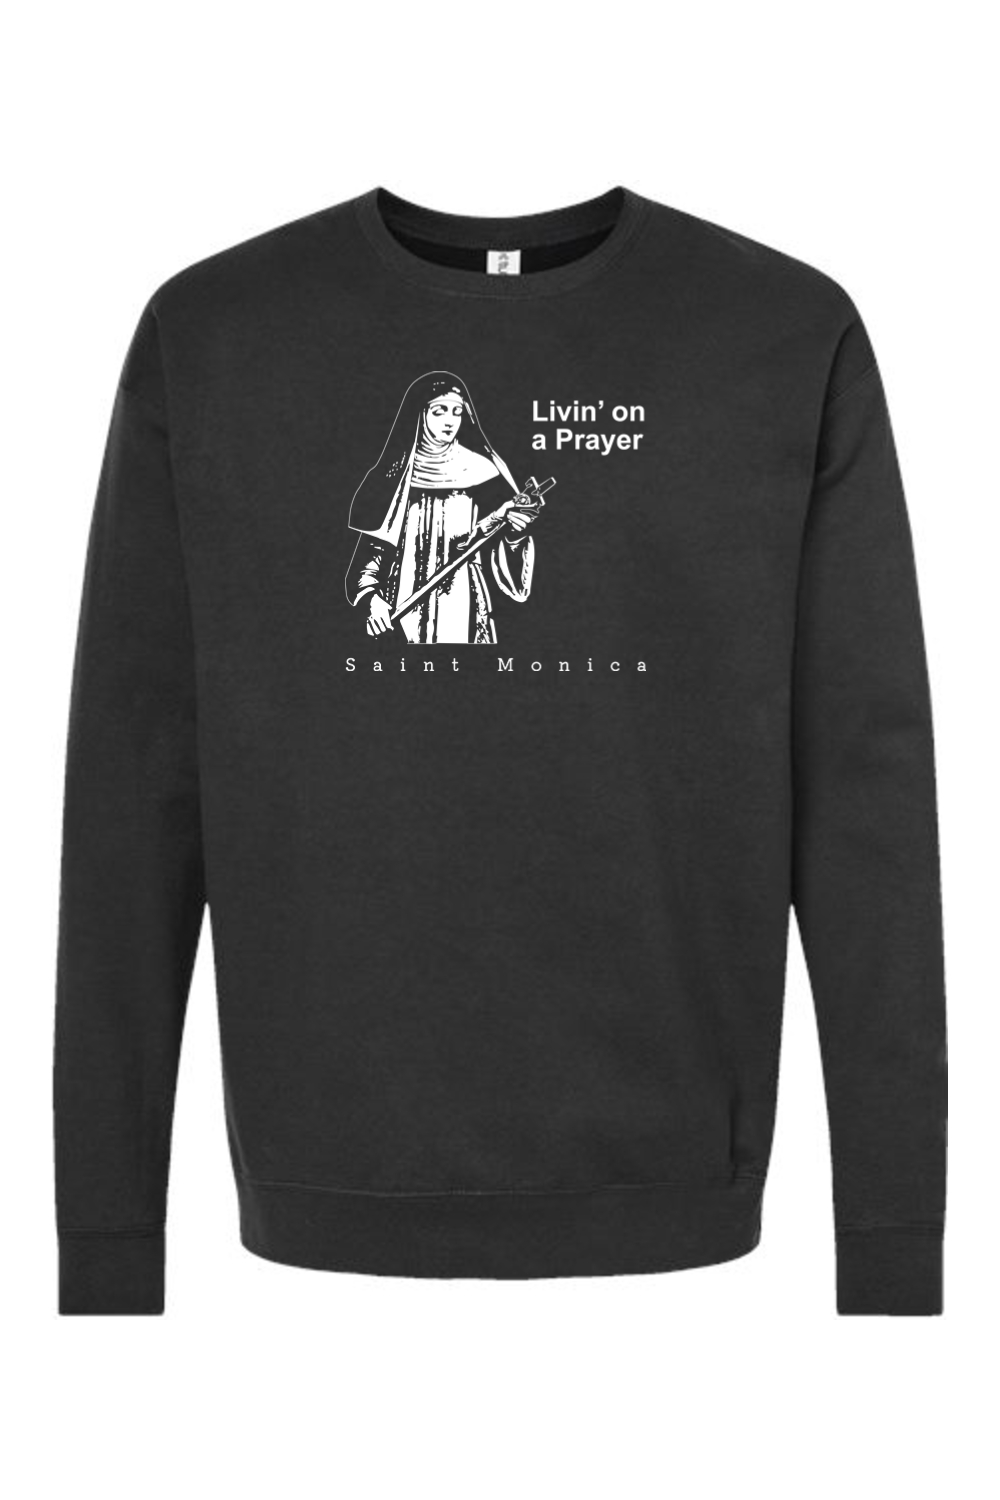 Livin' on a Prayer - St. Monica Crewneck Sweatshirt